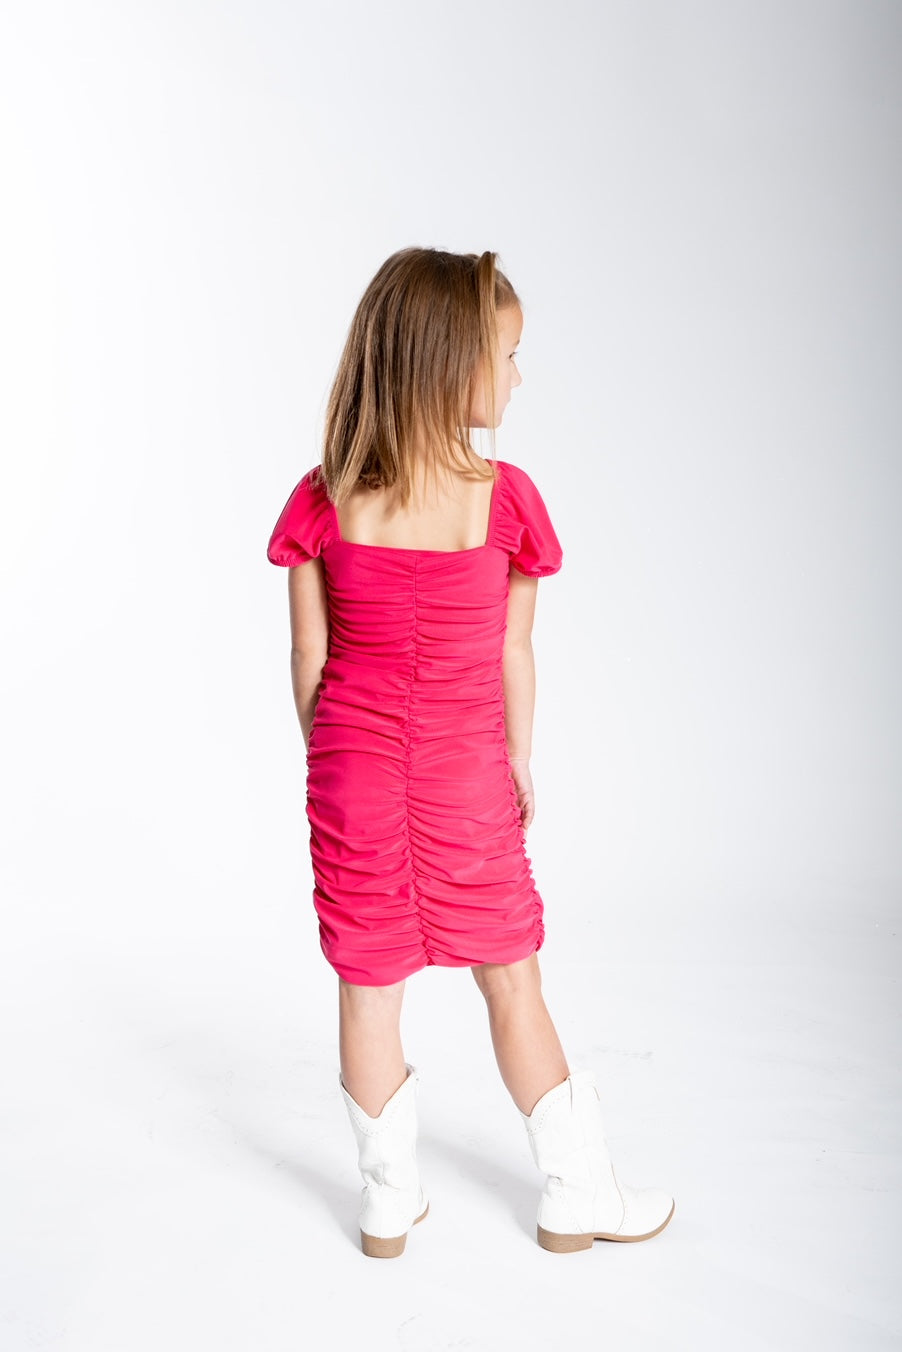 Cheryl Creations - Tween - Pink Amelia Dress